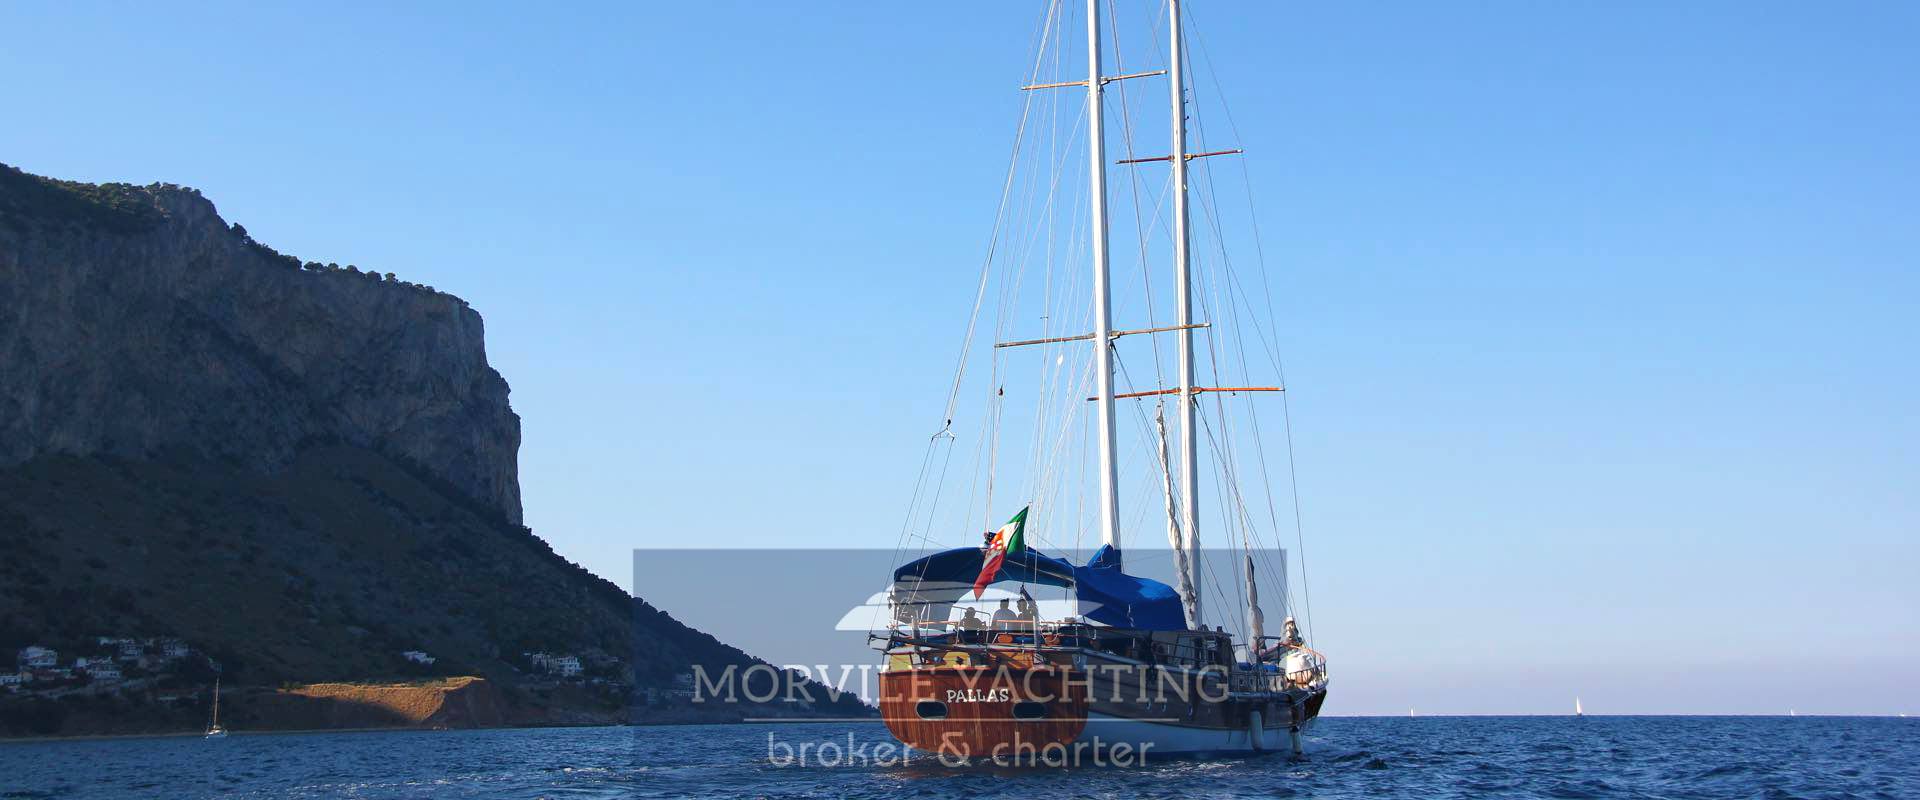 Caicco Pallas Barca a vela charter